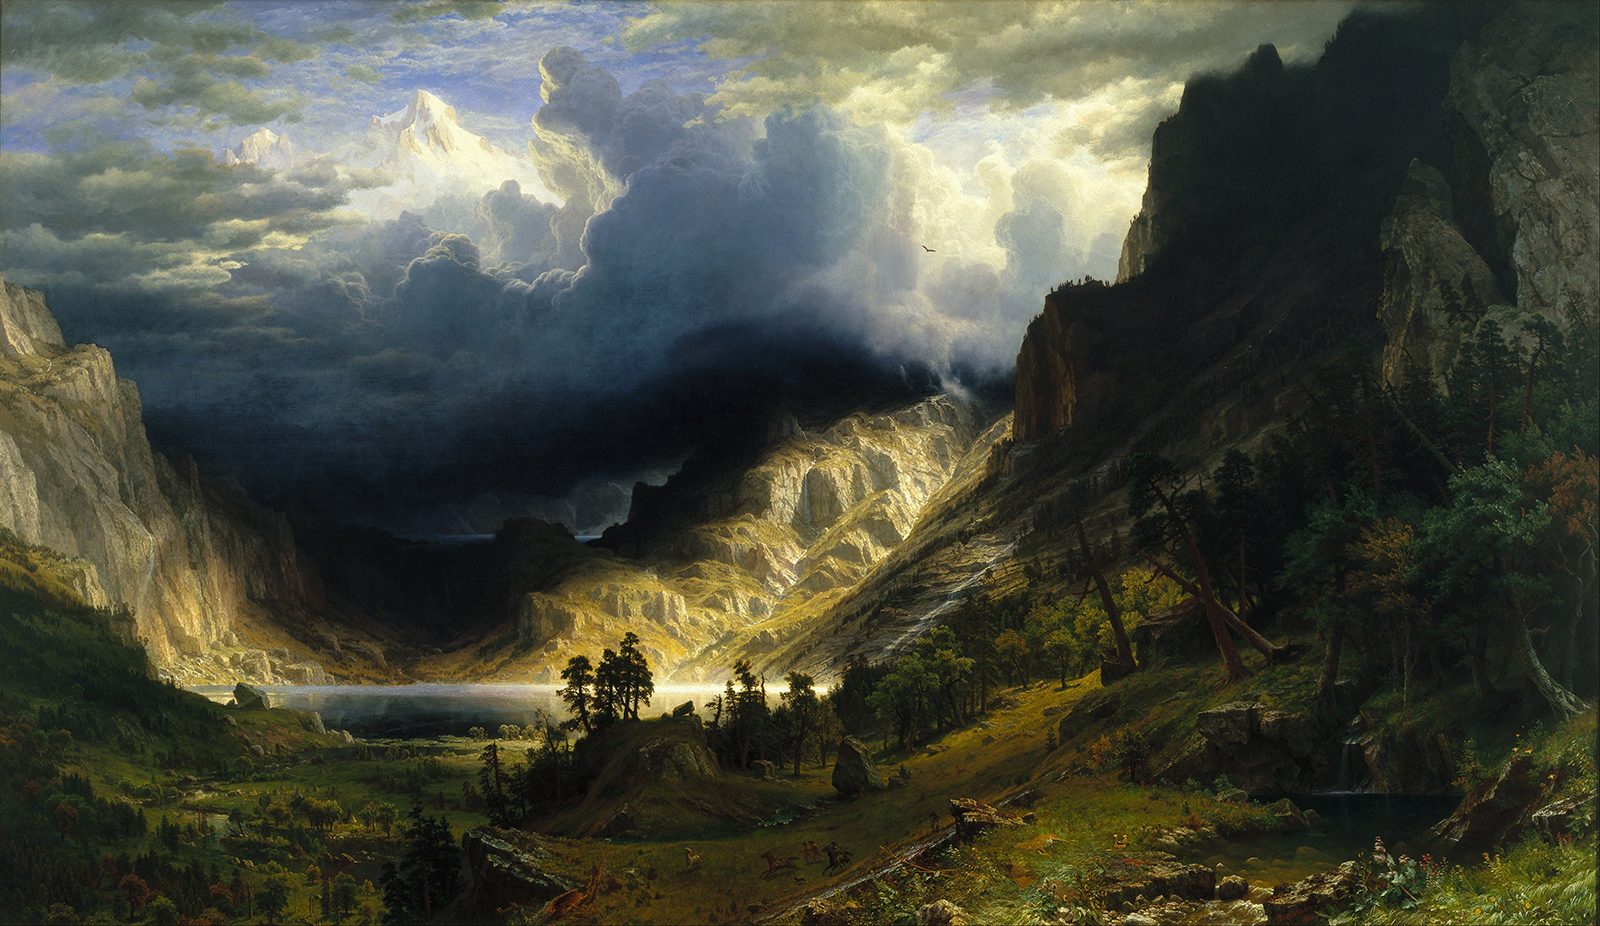 Albert_Bierstadt_-_A_Storm_in_the_Rocky_Mountains